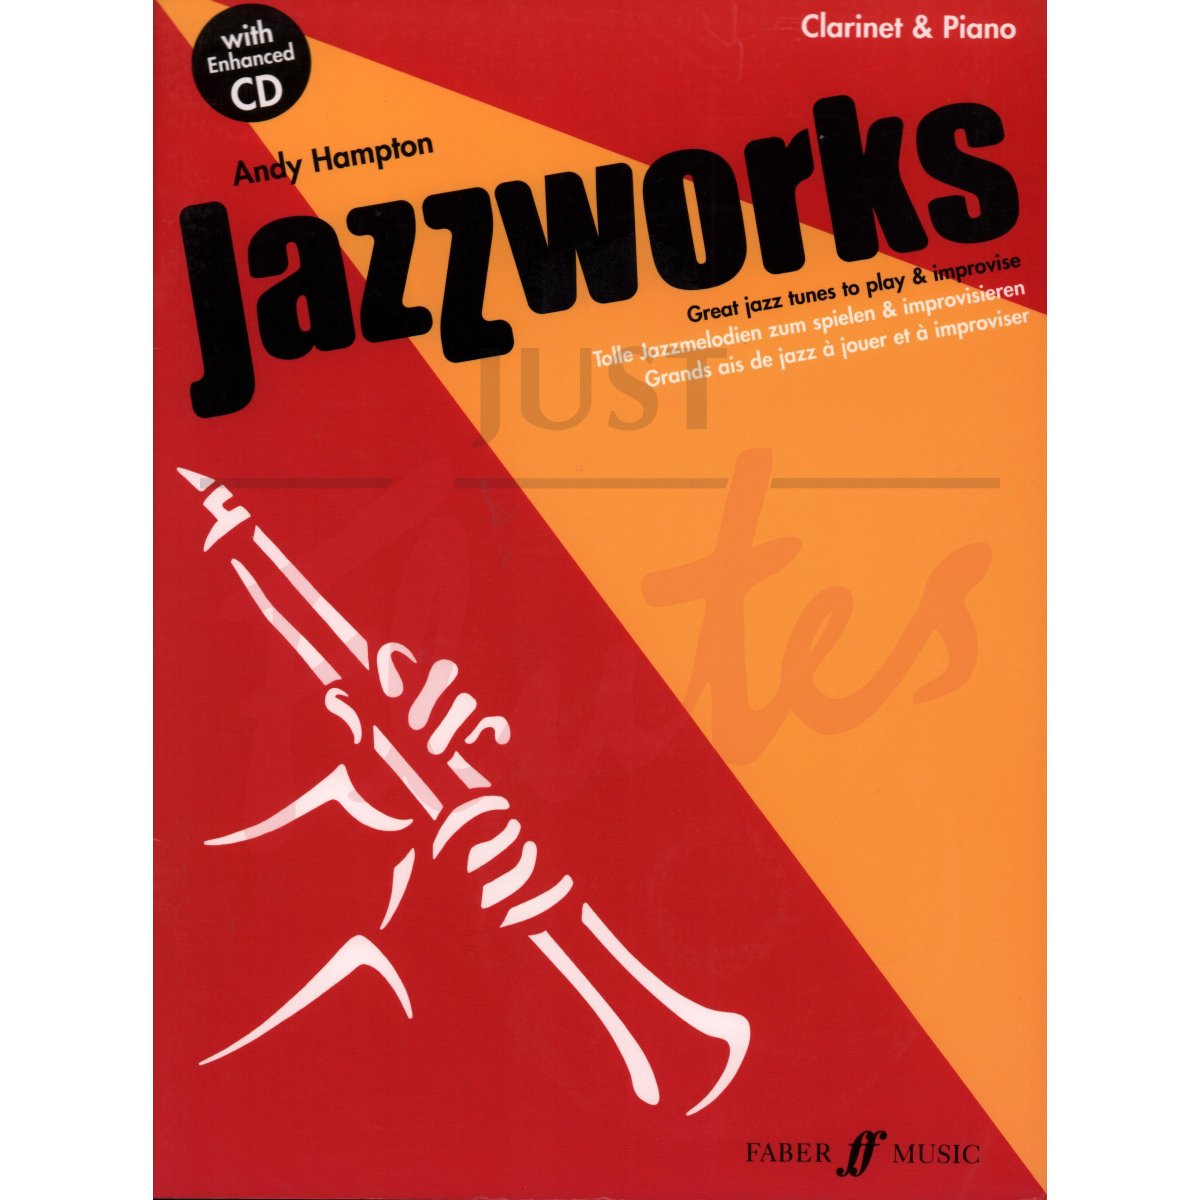 Jazzworks [Clarinet]